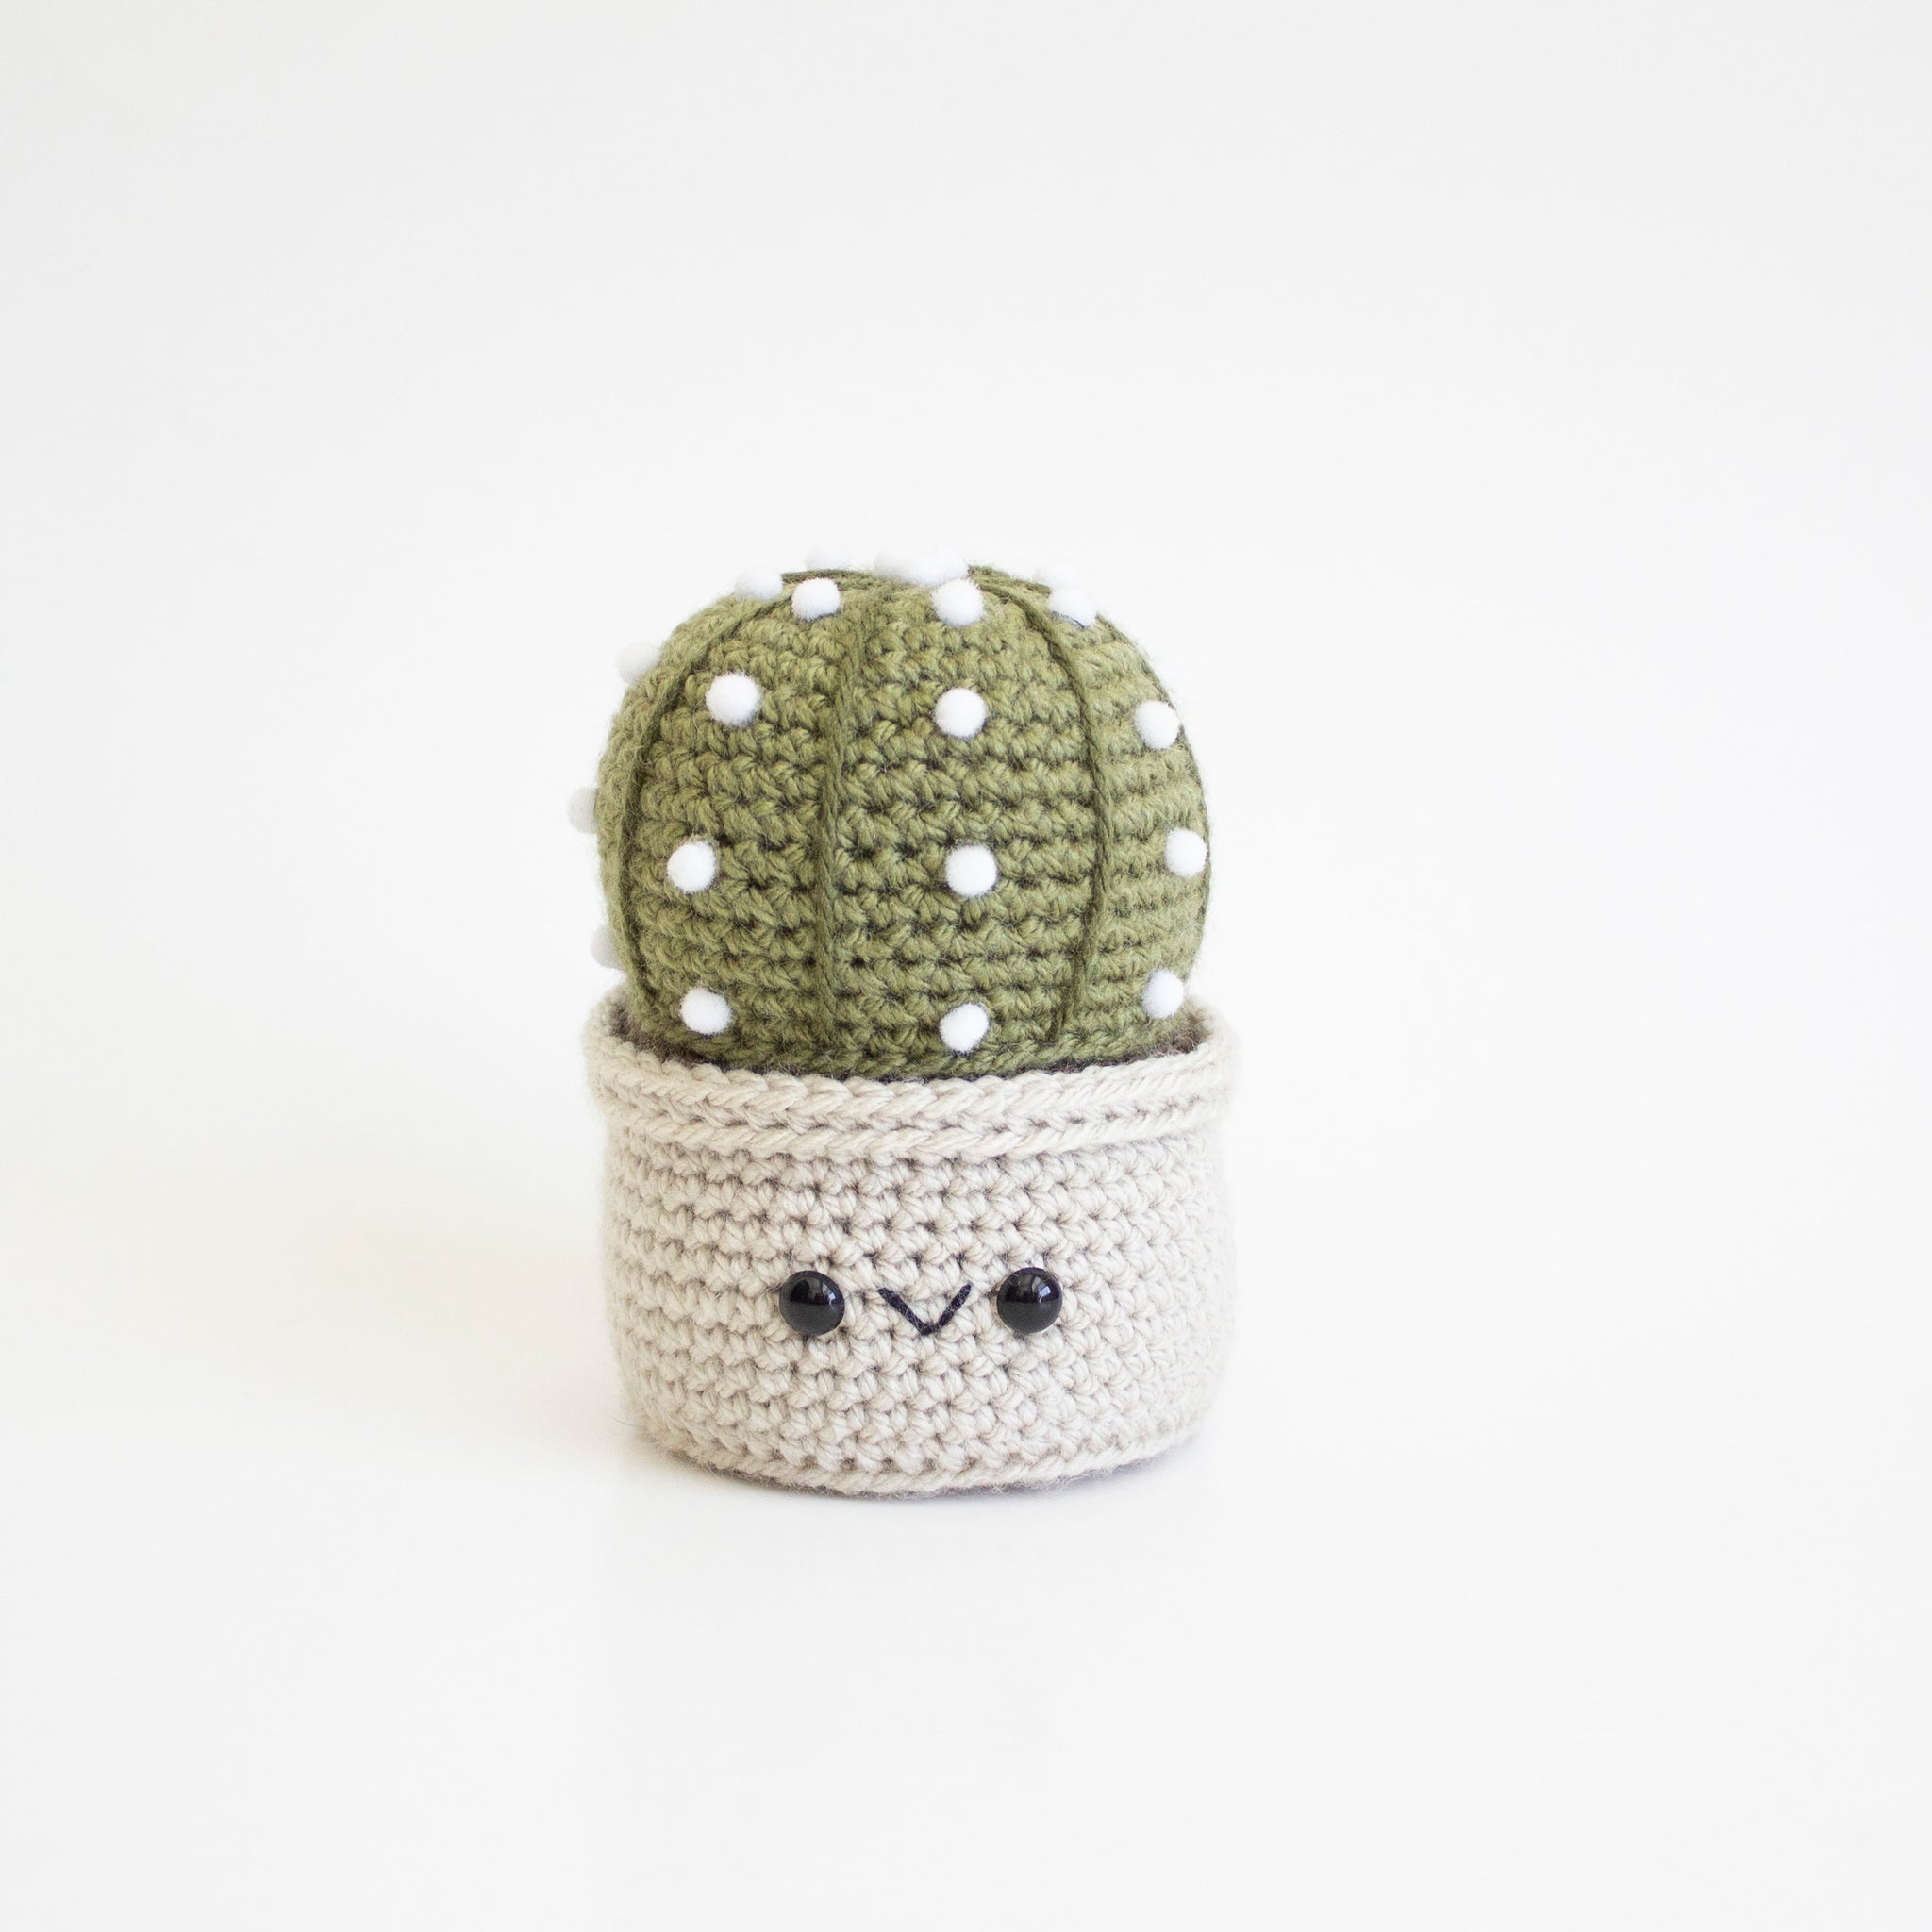 Sand Dollar Crochet Cactus Pattern - Amigurumi House Plant